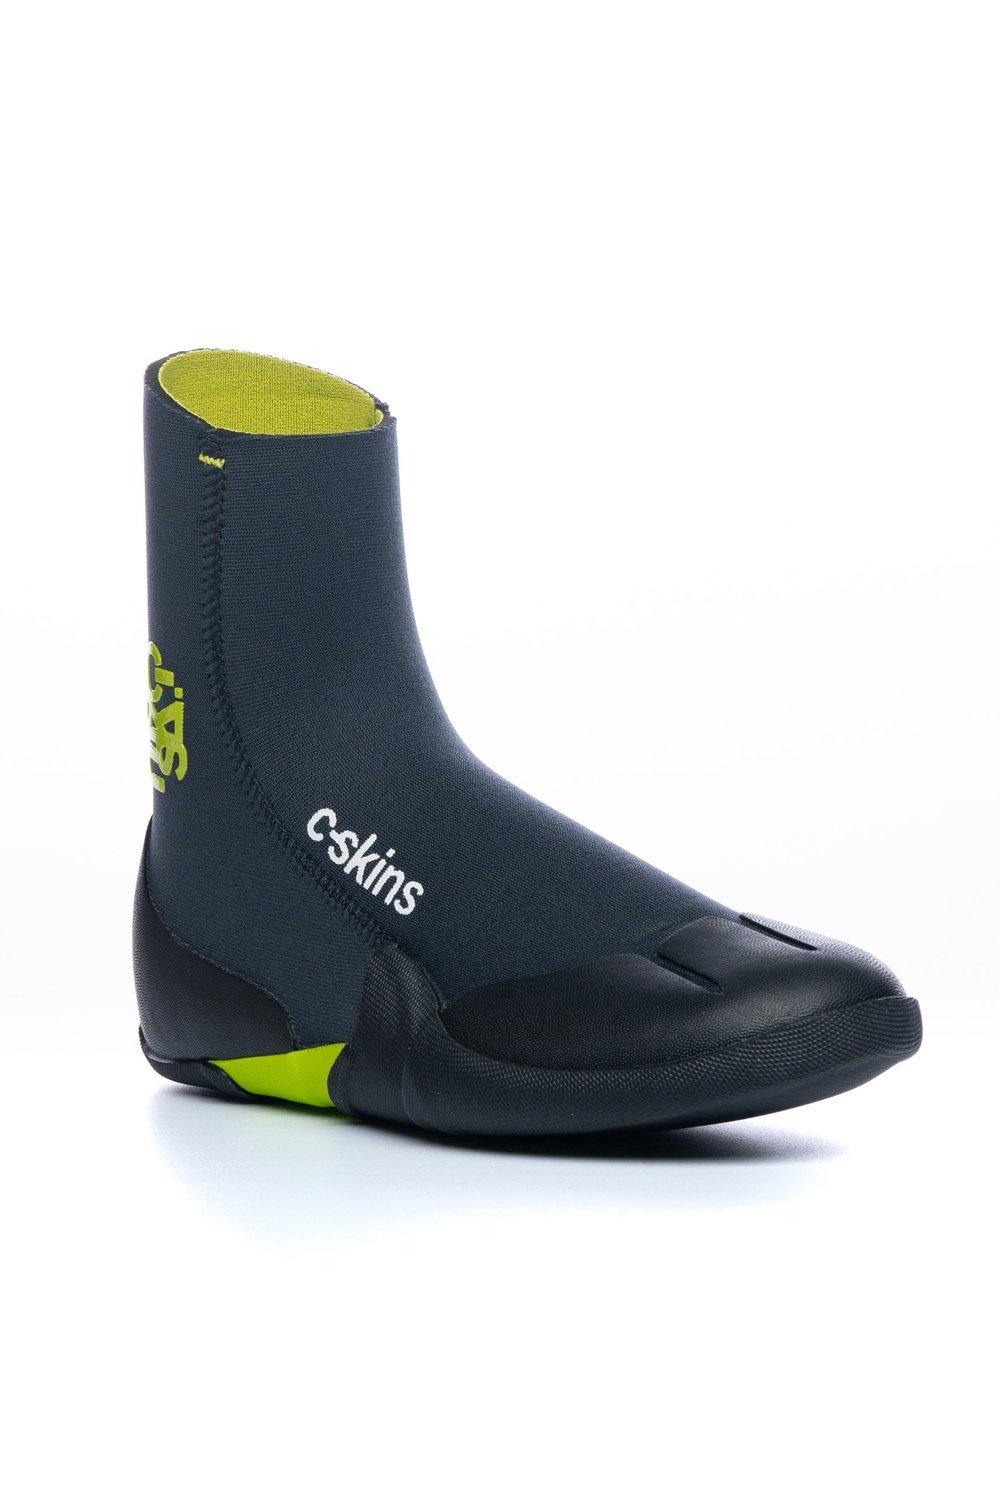 C-Skins Legend 3.5mm Junior Zipped Round Toe Boots - Black/Ocean | Graphite/Flash Green - Stokedstore